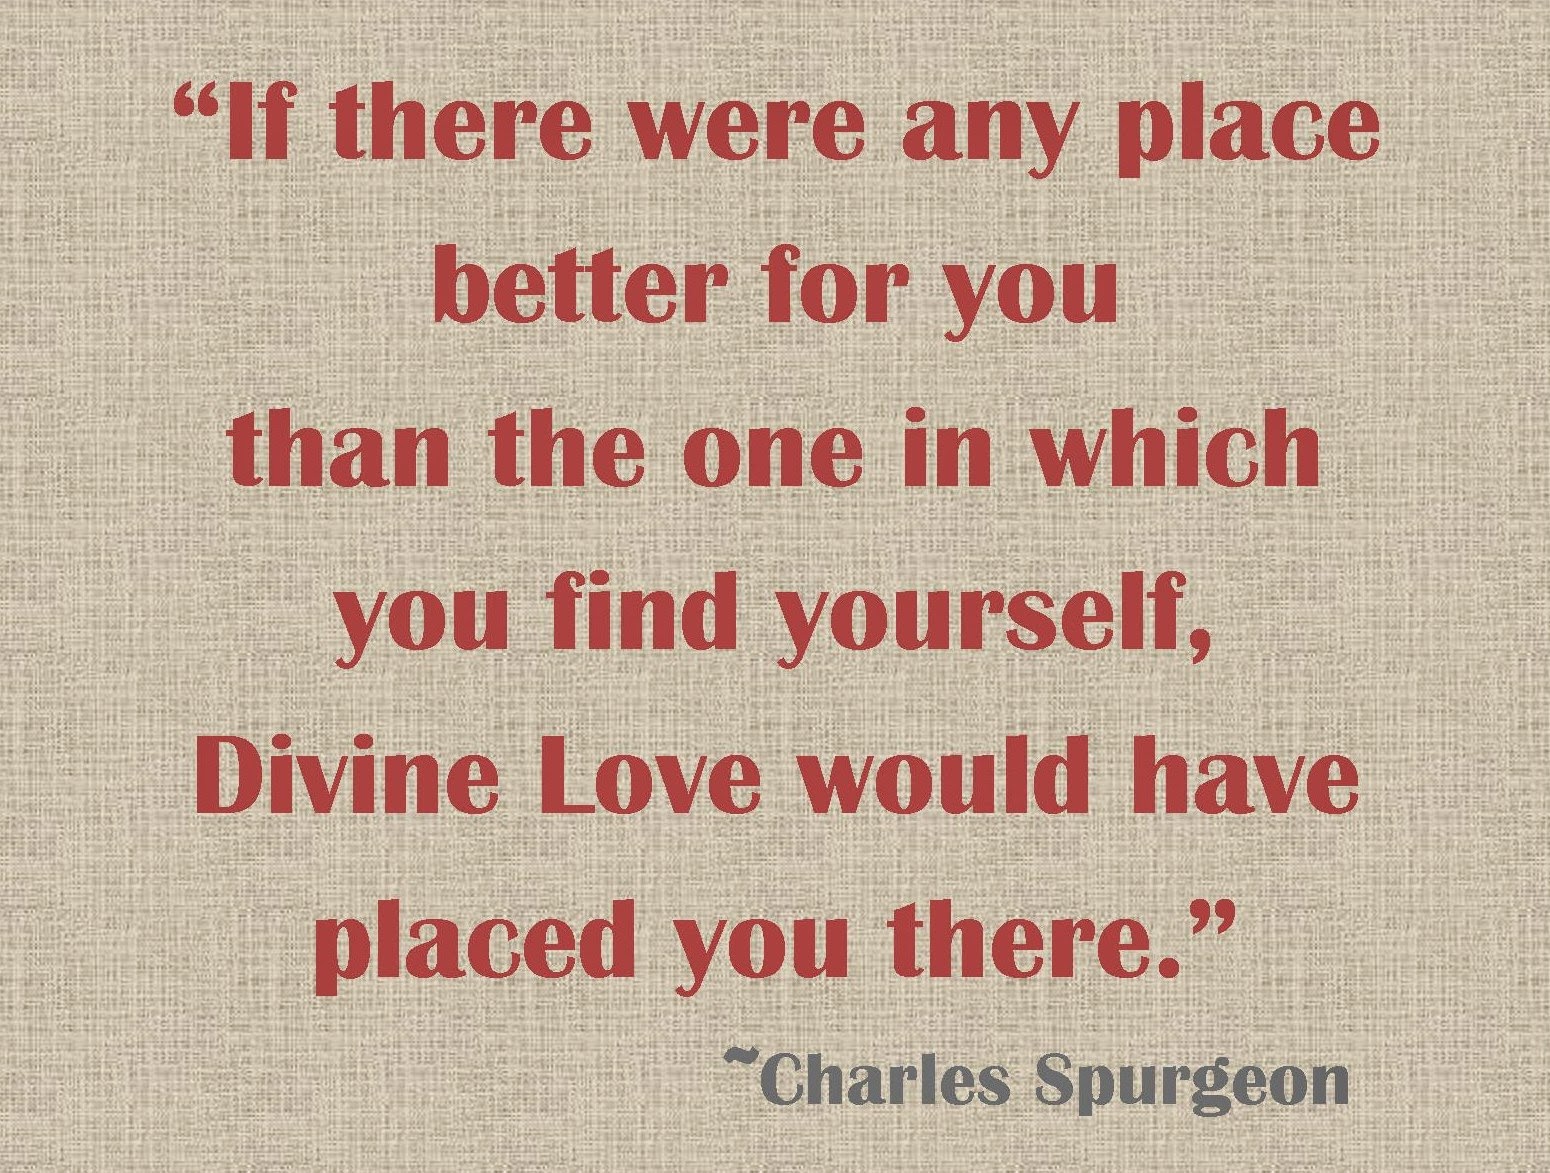 Spurgeon Quotes On Love. QuotesGram